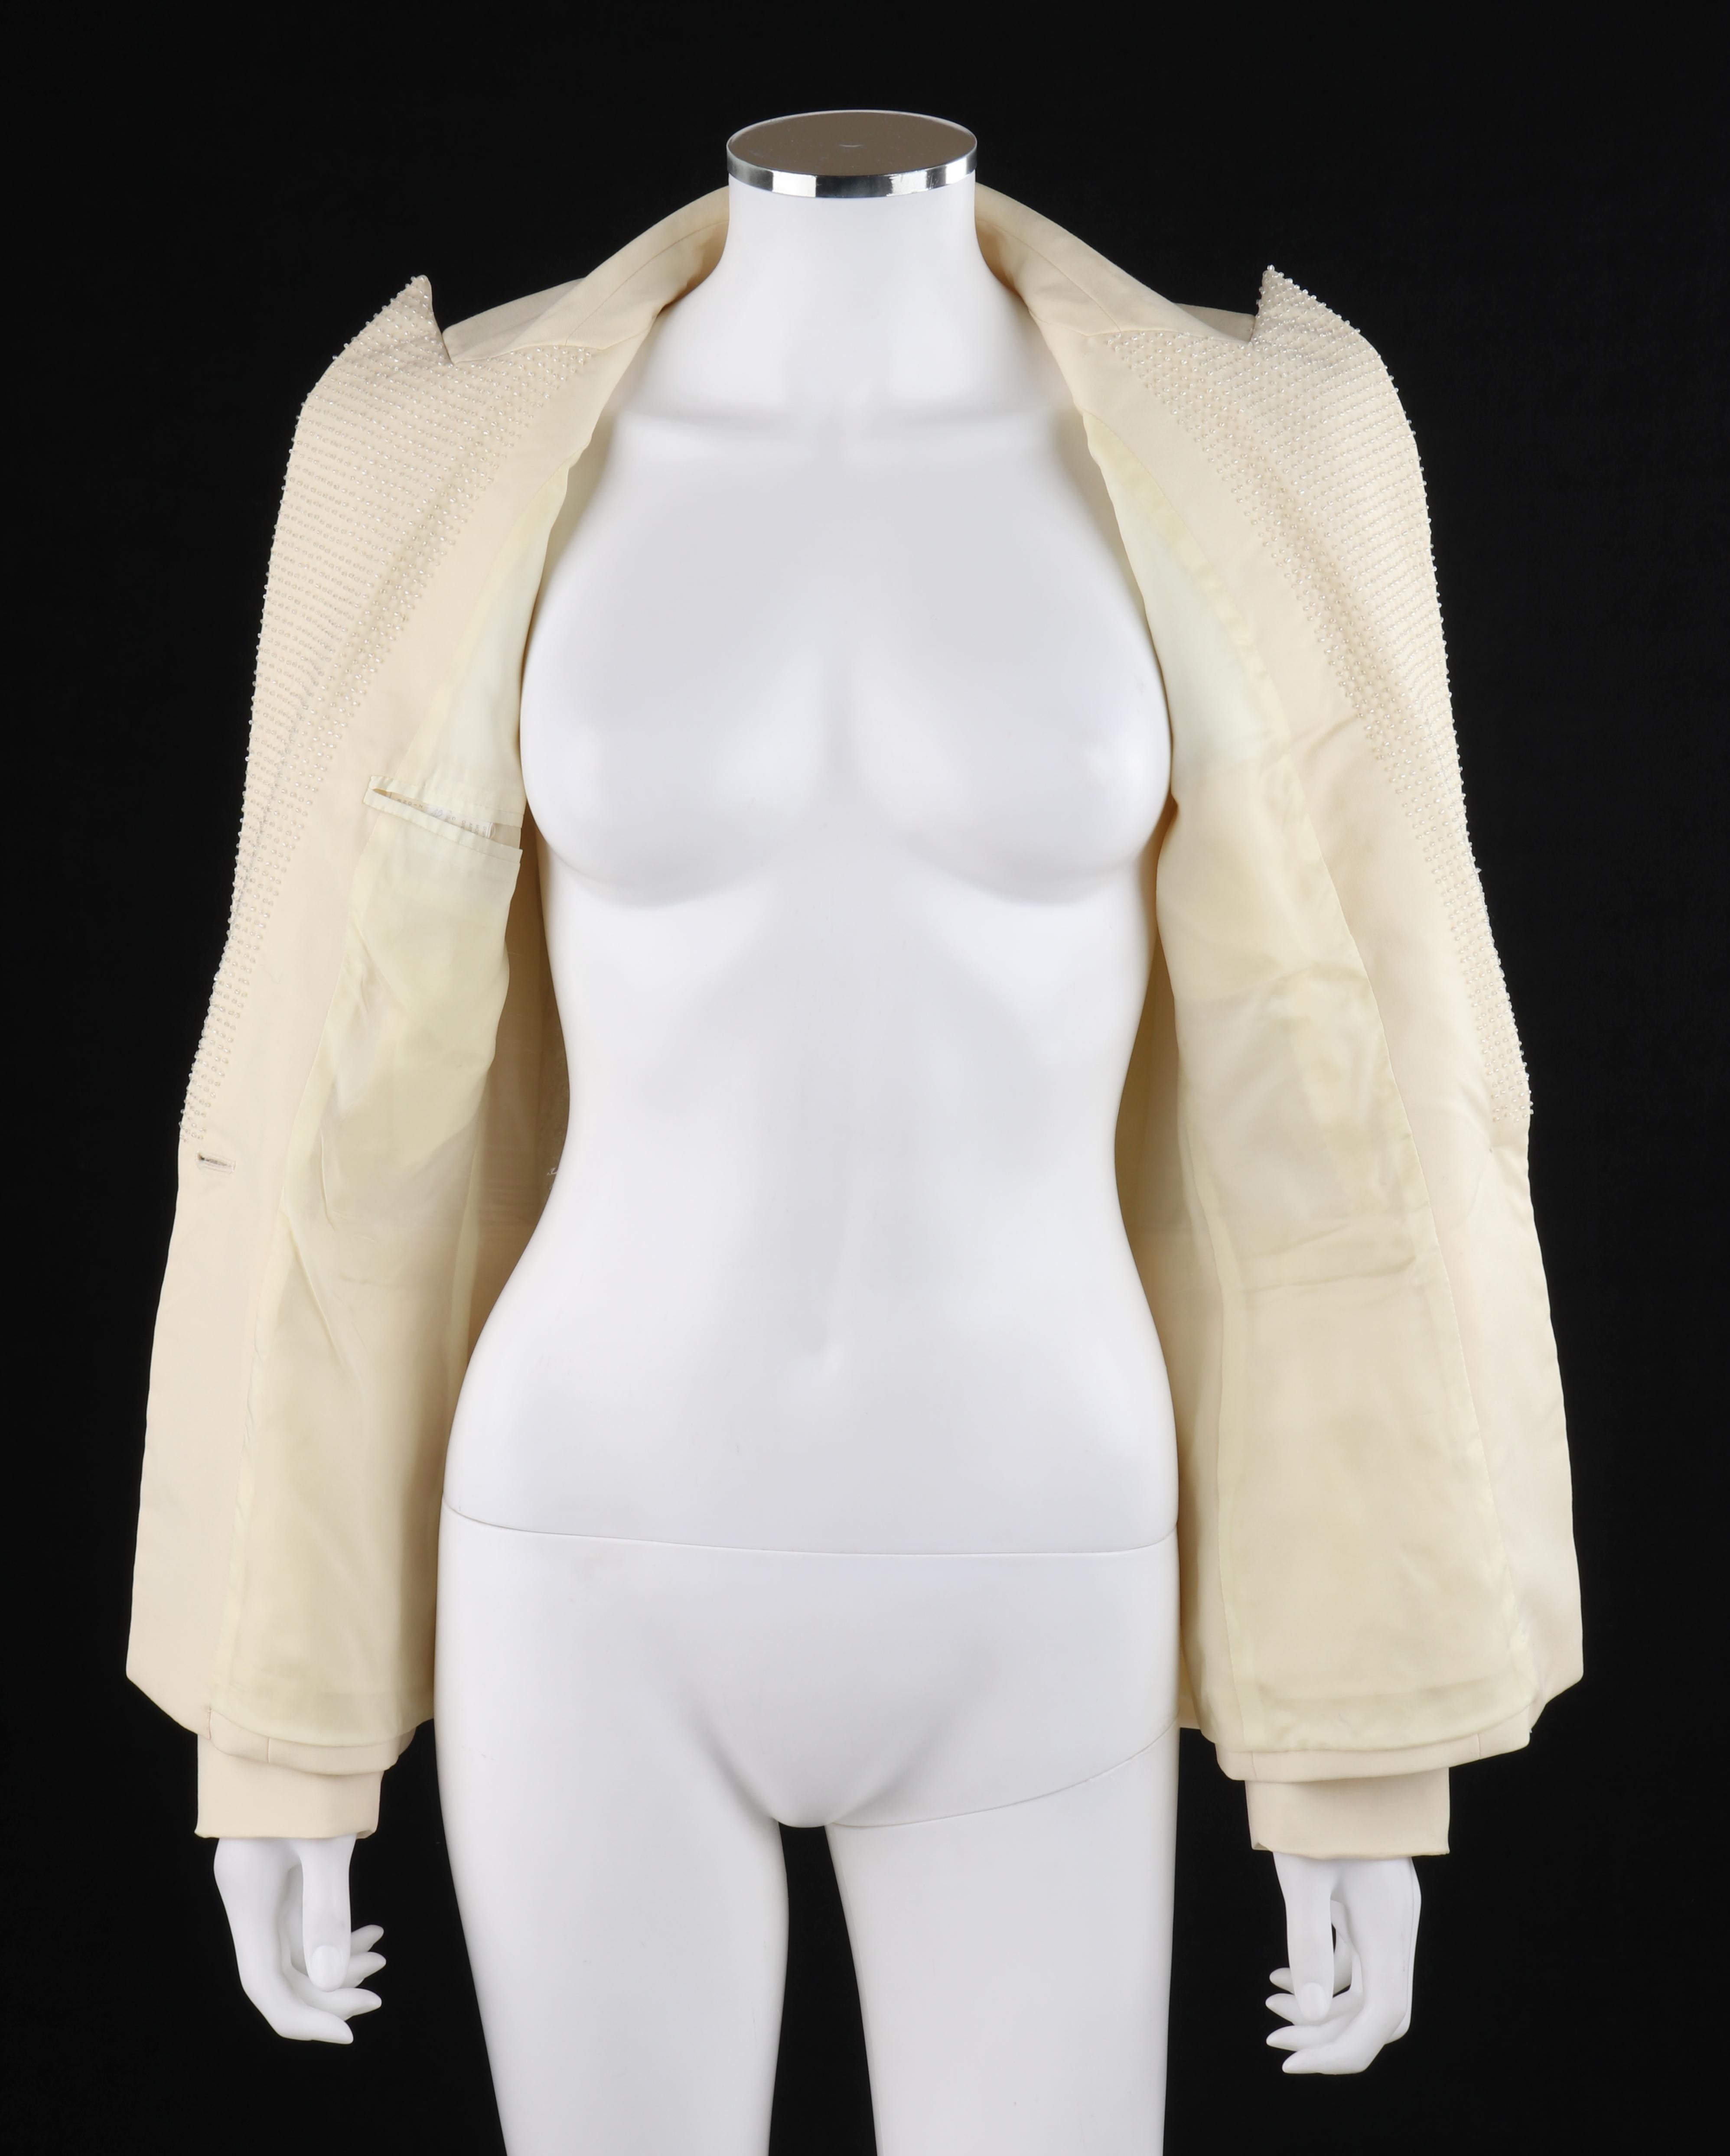 ALEXANDER McQUEEN S/S 1998 “Golden Shower” Light Yellow Beaded Blazer Jacket In Good Condition For Sale In Thiensville, WI